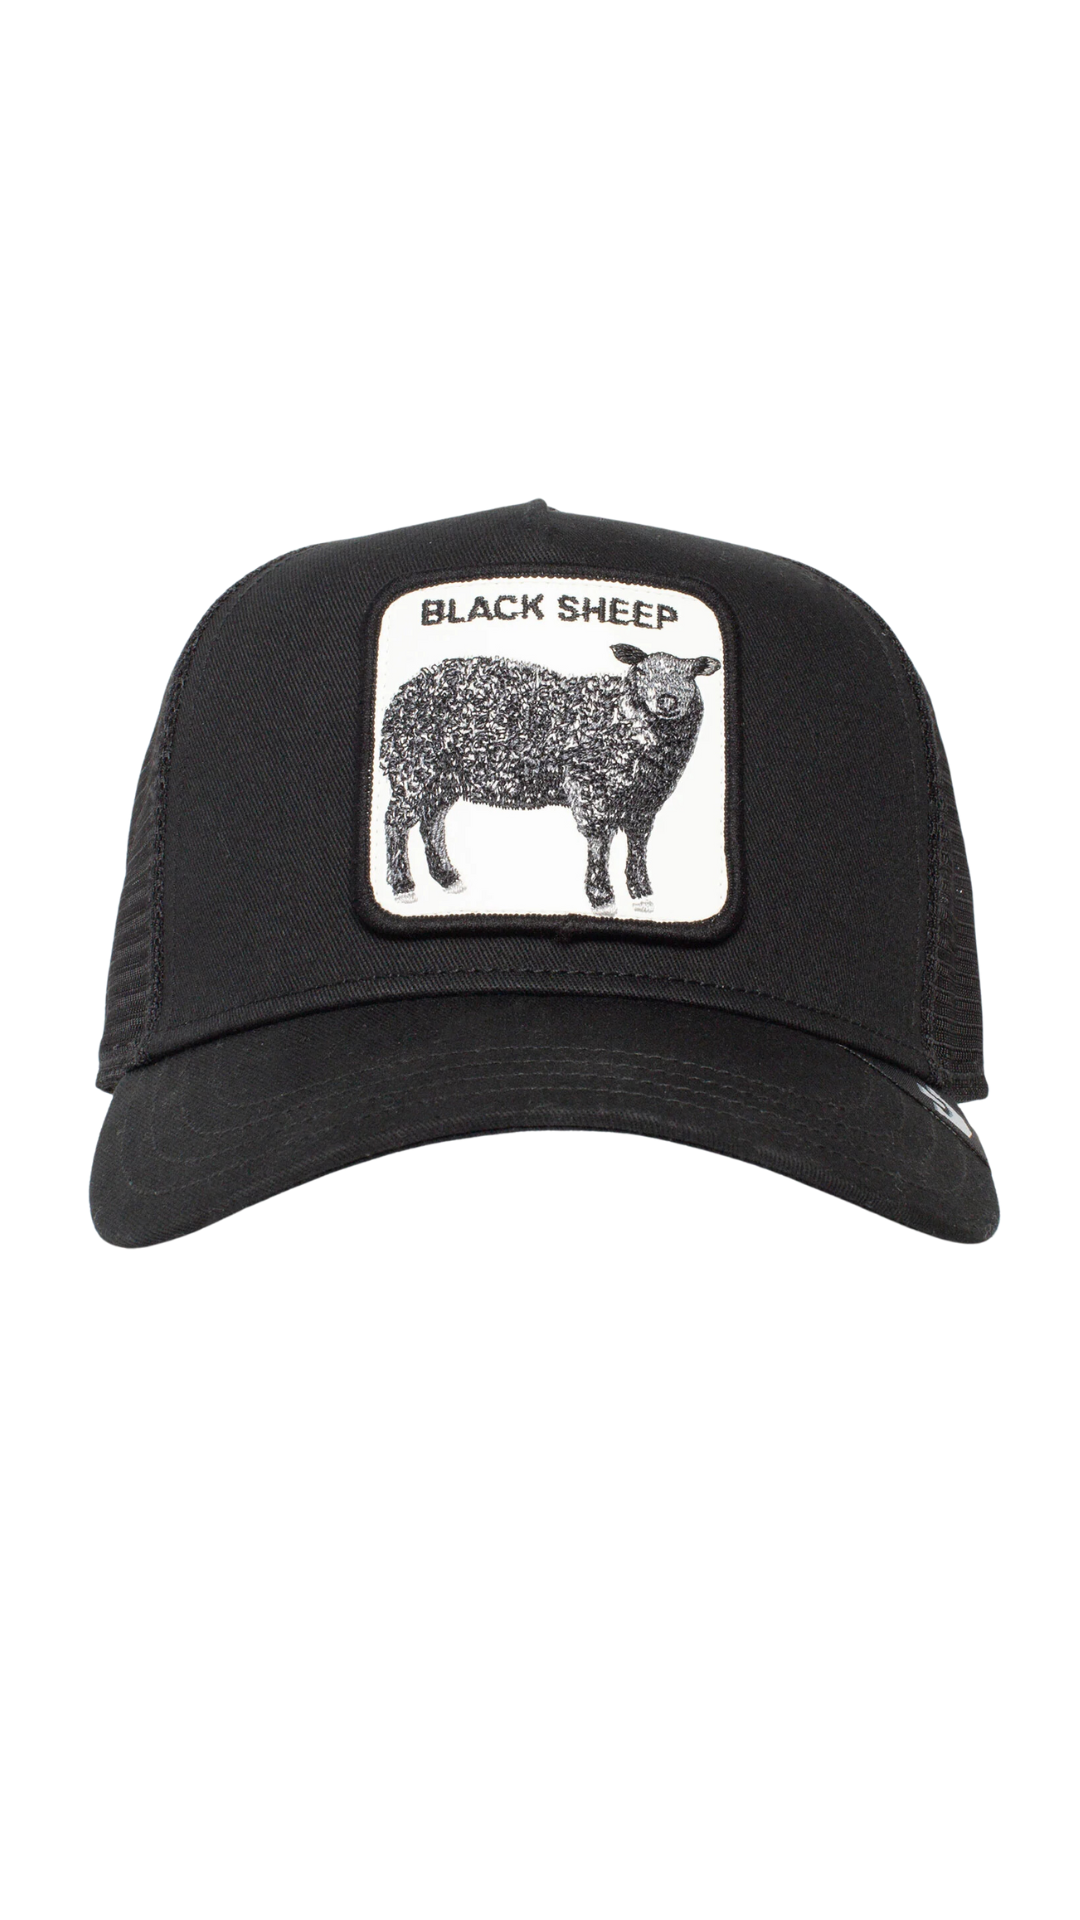 BLK The Black Sheep Hat